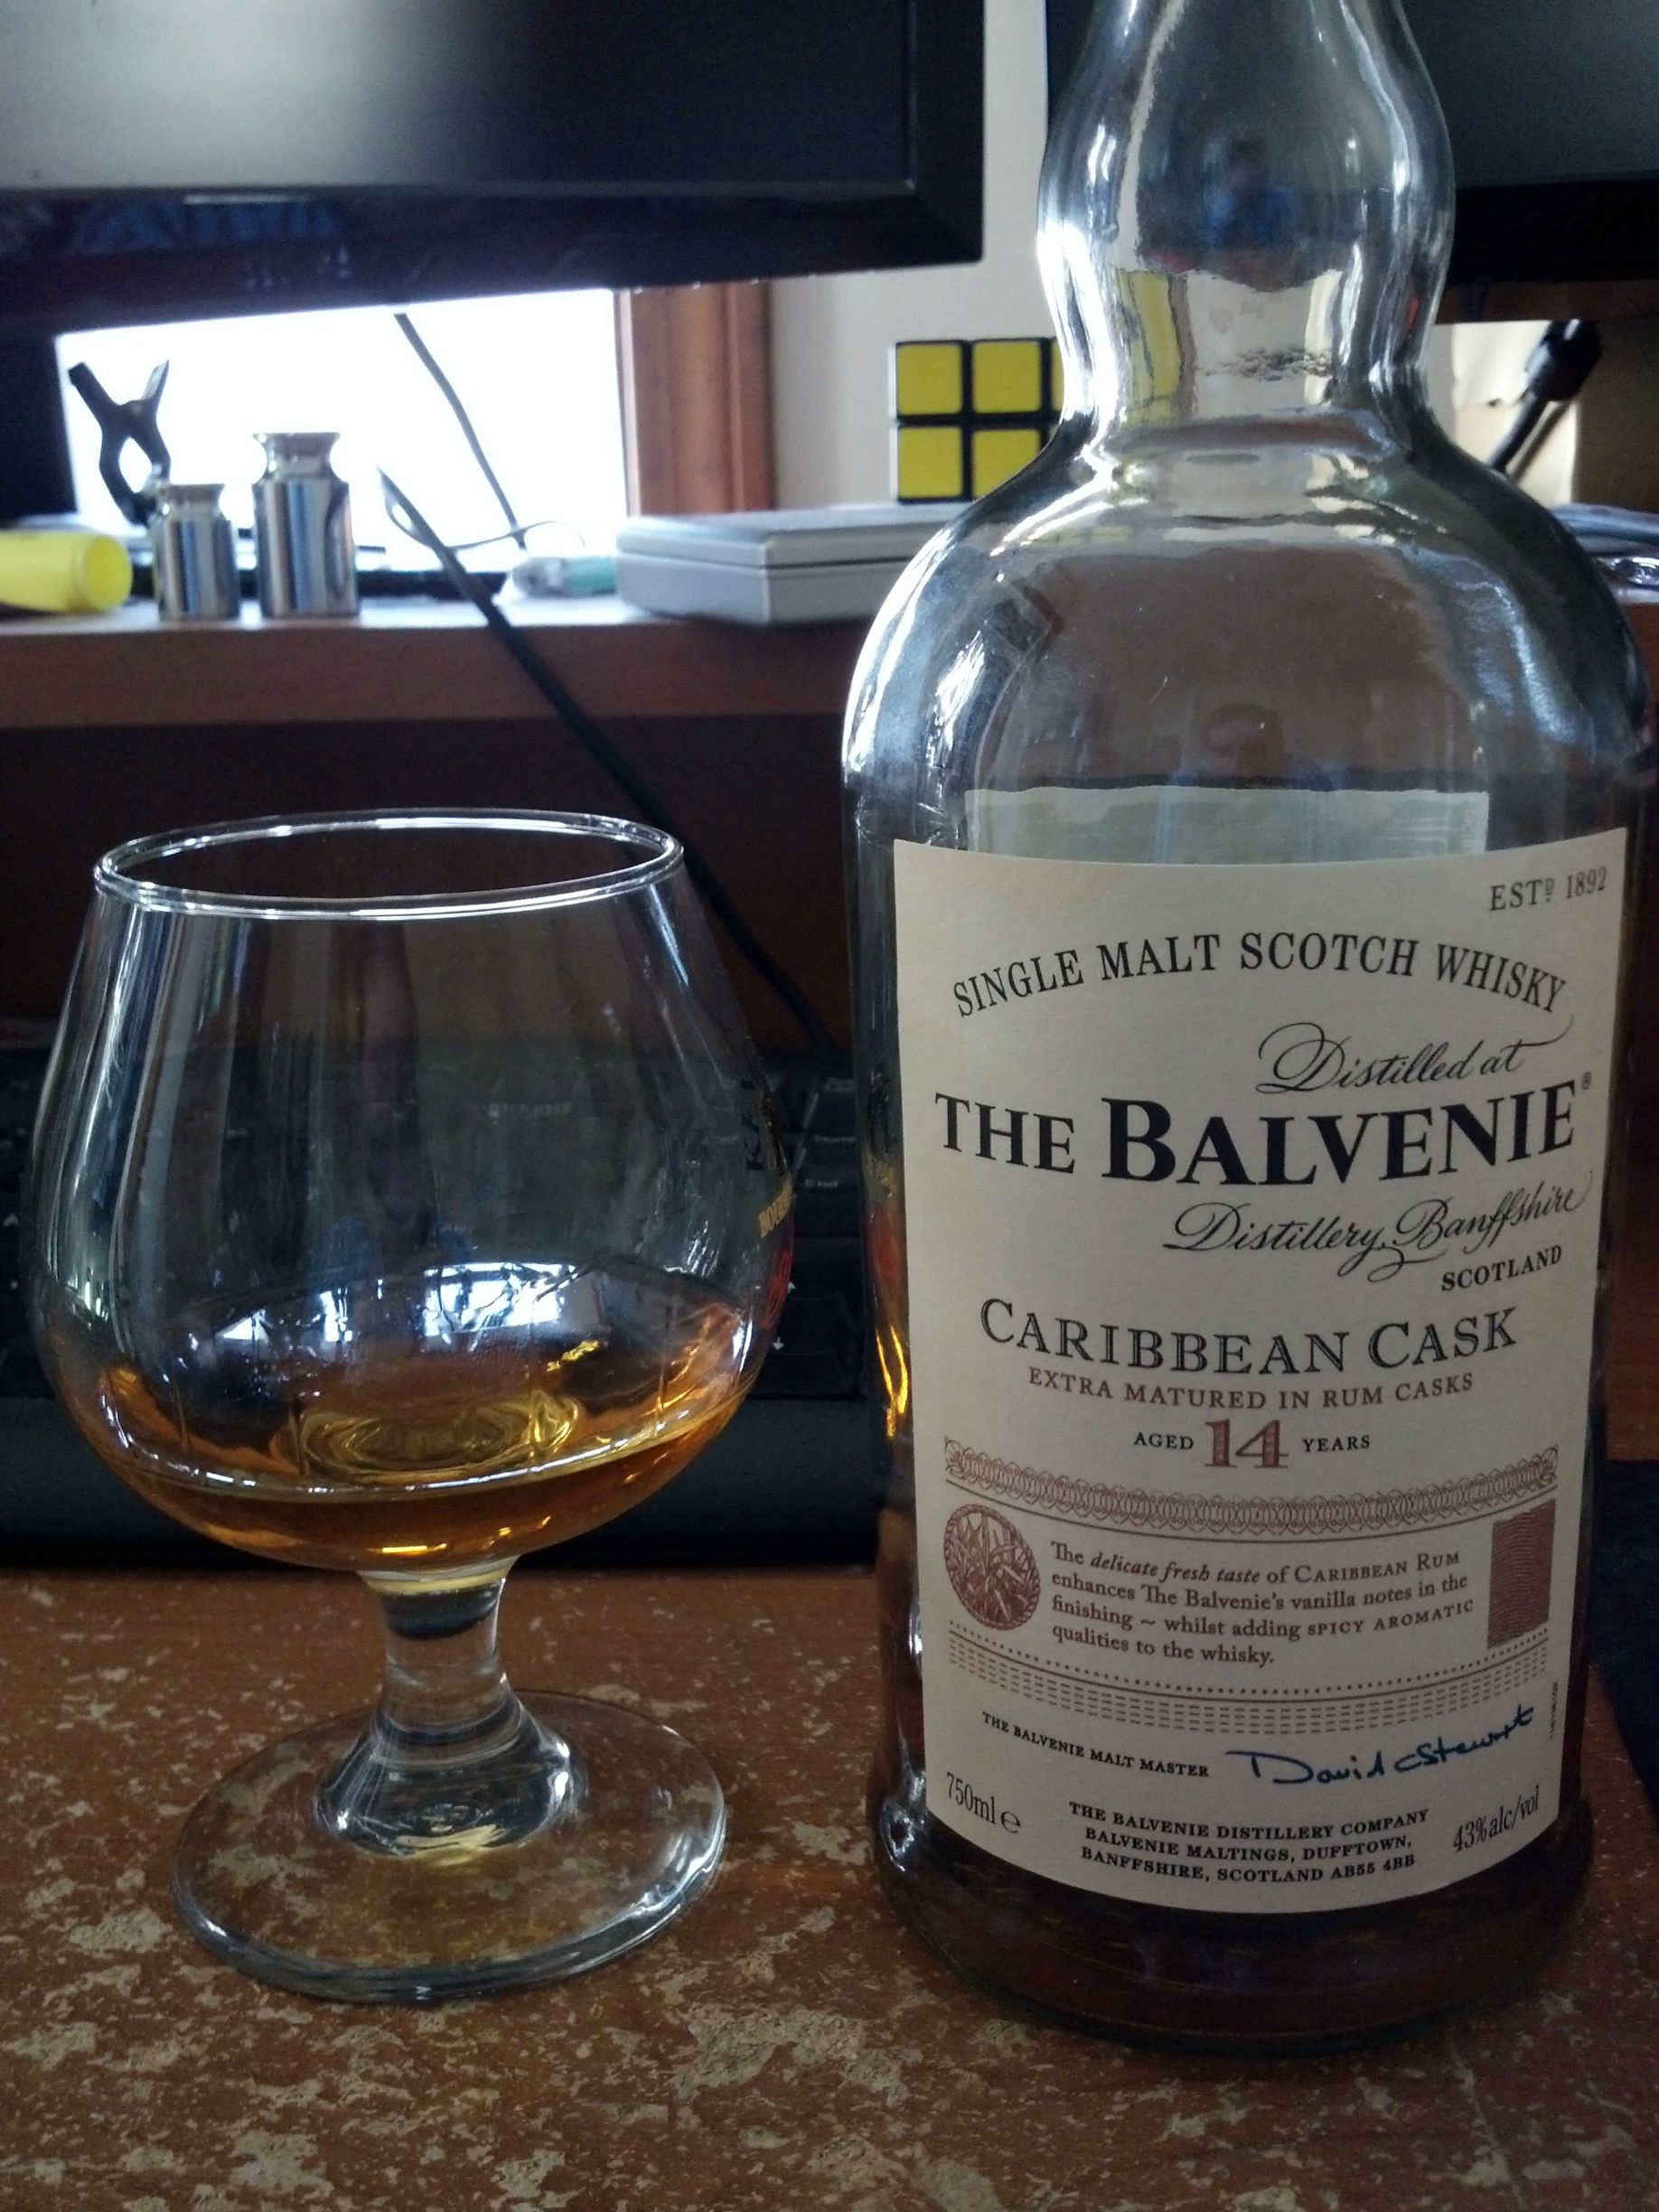 The Balvenie Caribbean Cask - single malt scotch